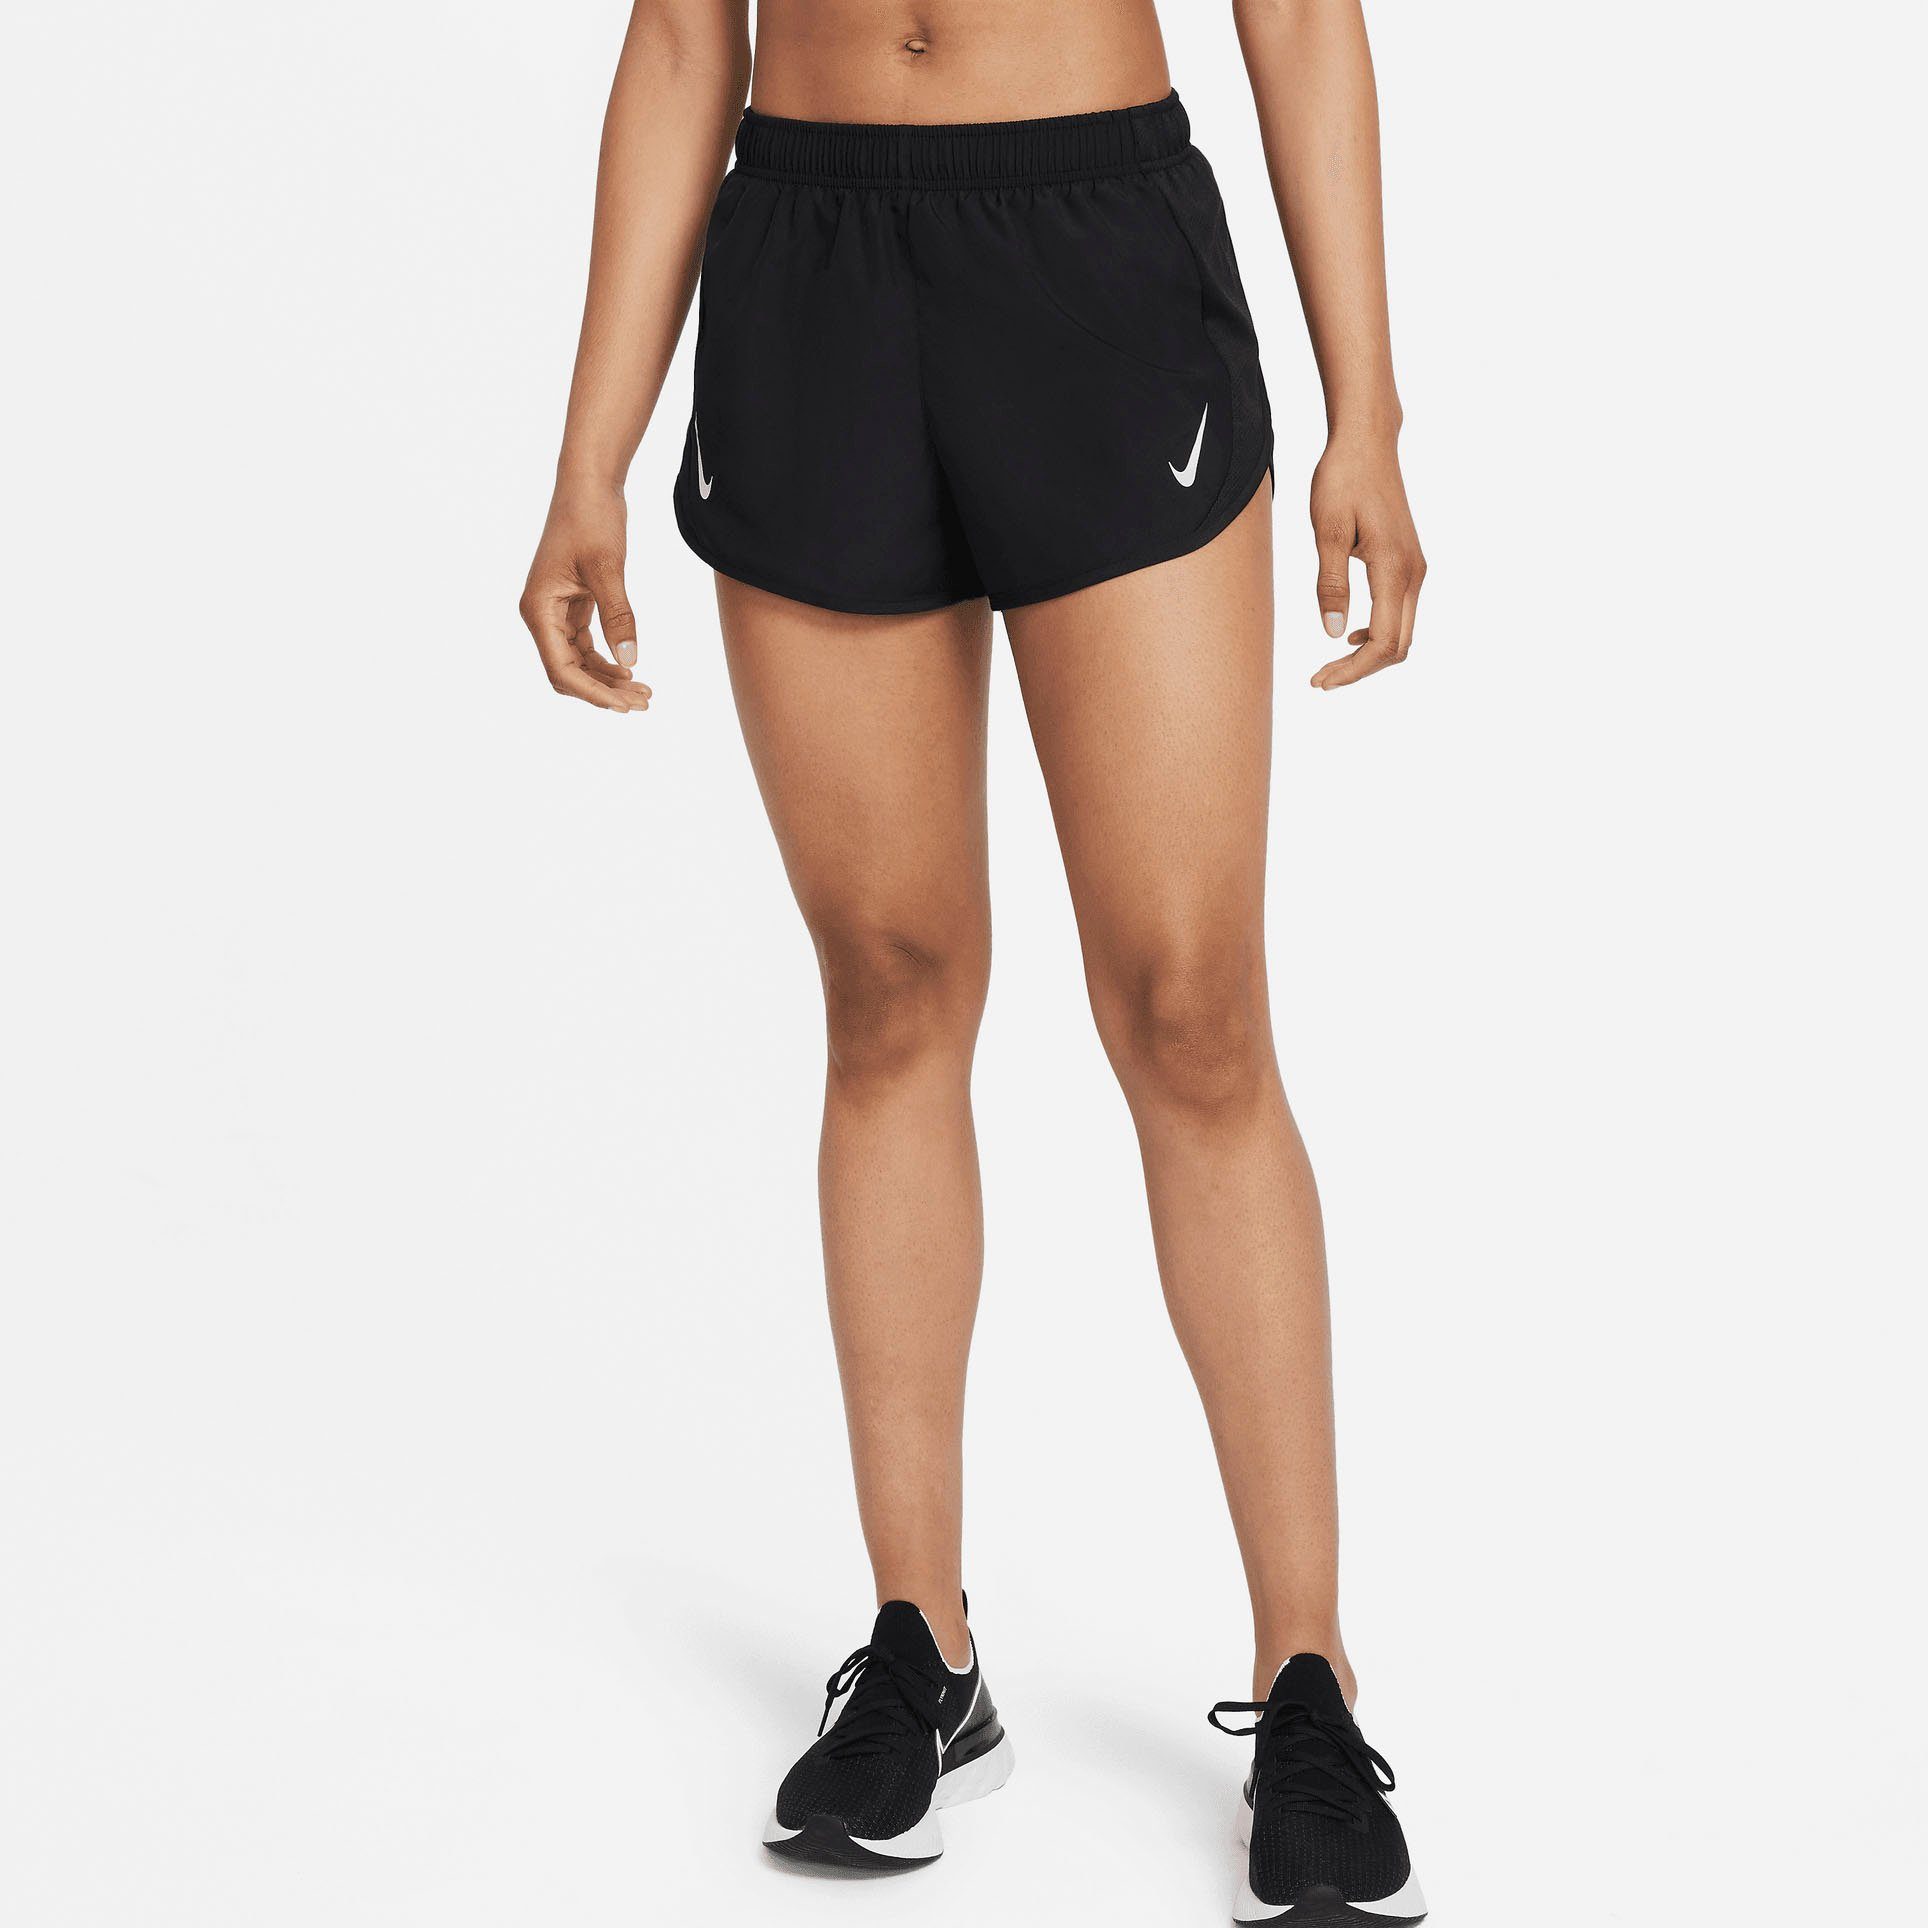 Nike Laufshorts Dri-FIT schwarz Shorts Women's Running Tempo Race